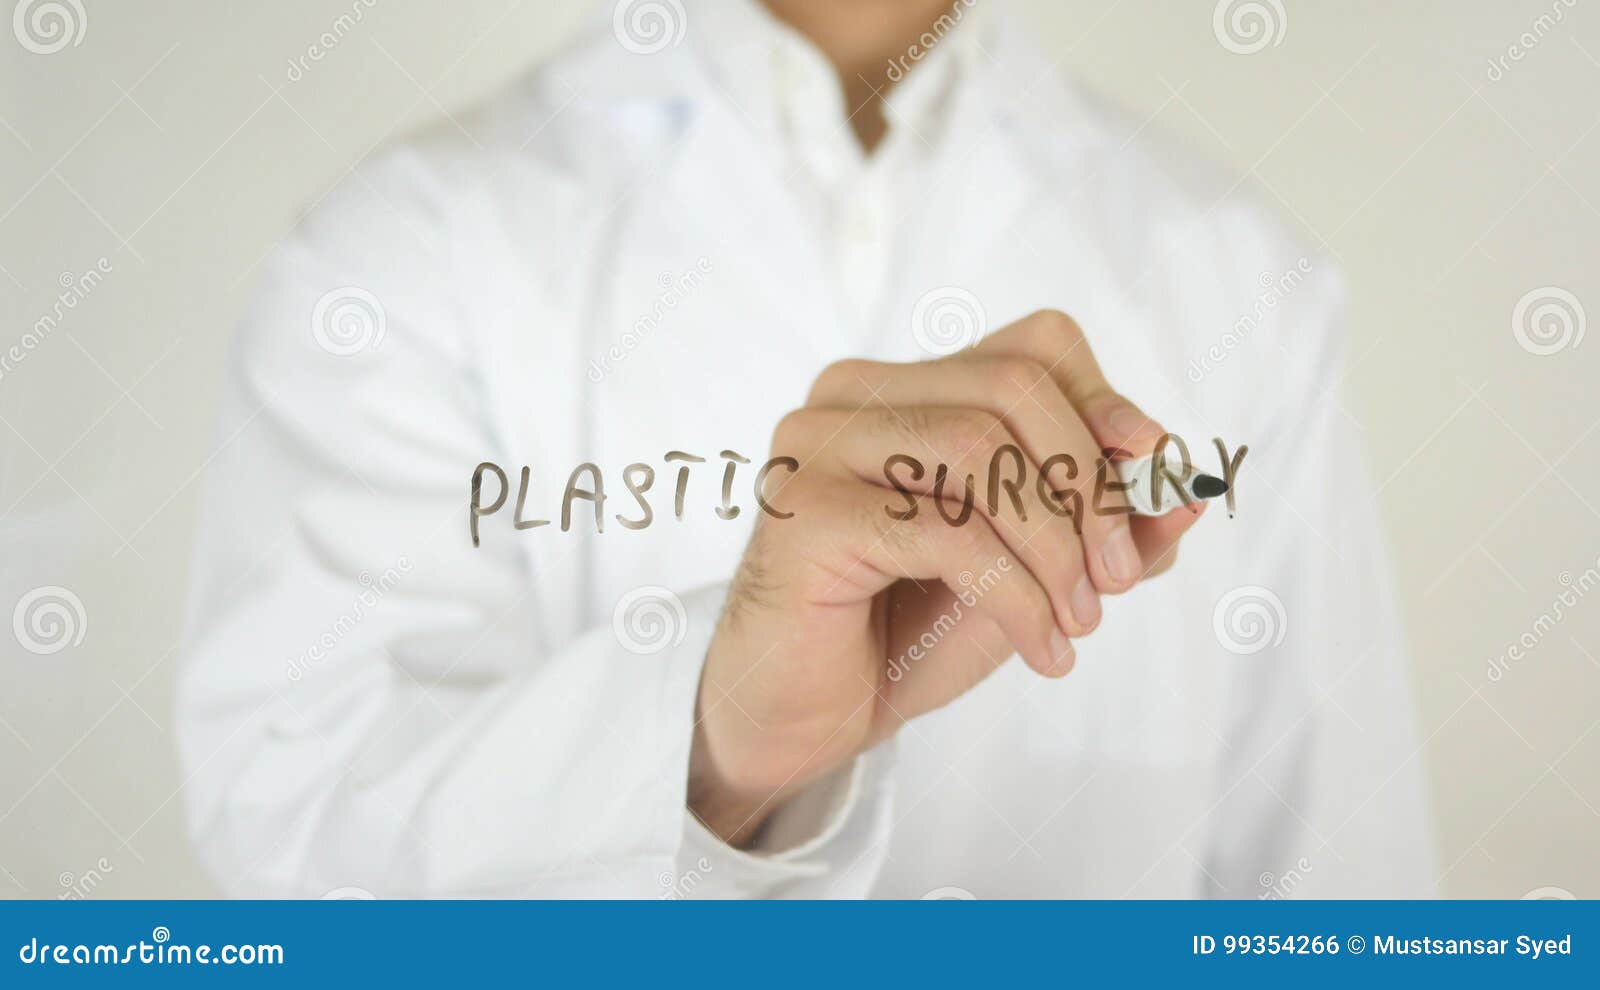 Plastic Surgery, Written On Glass Stock Photo - Image of ...